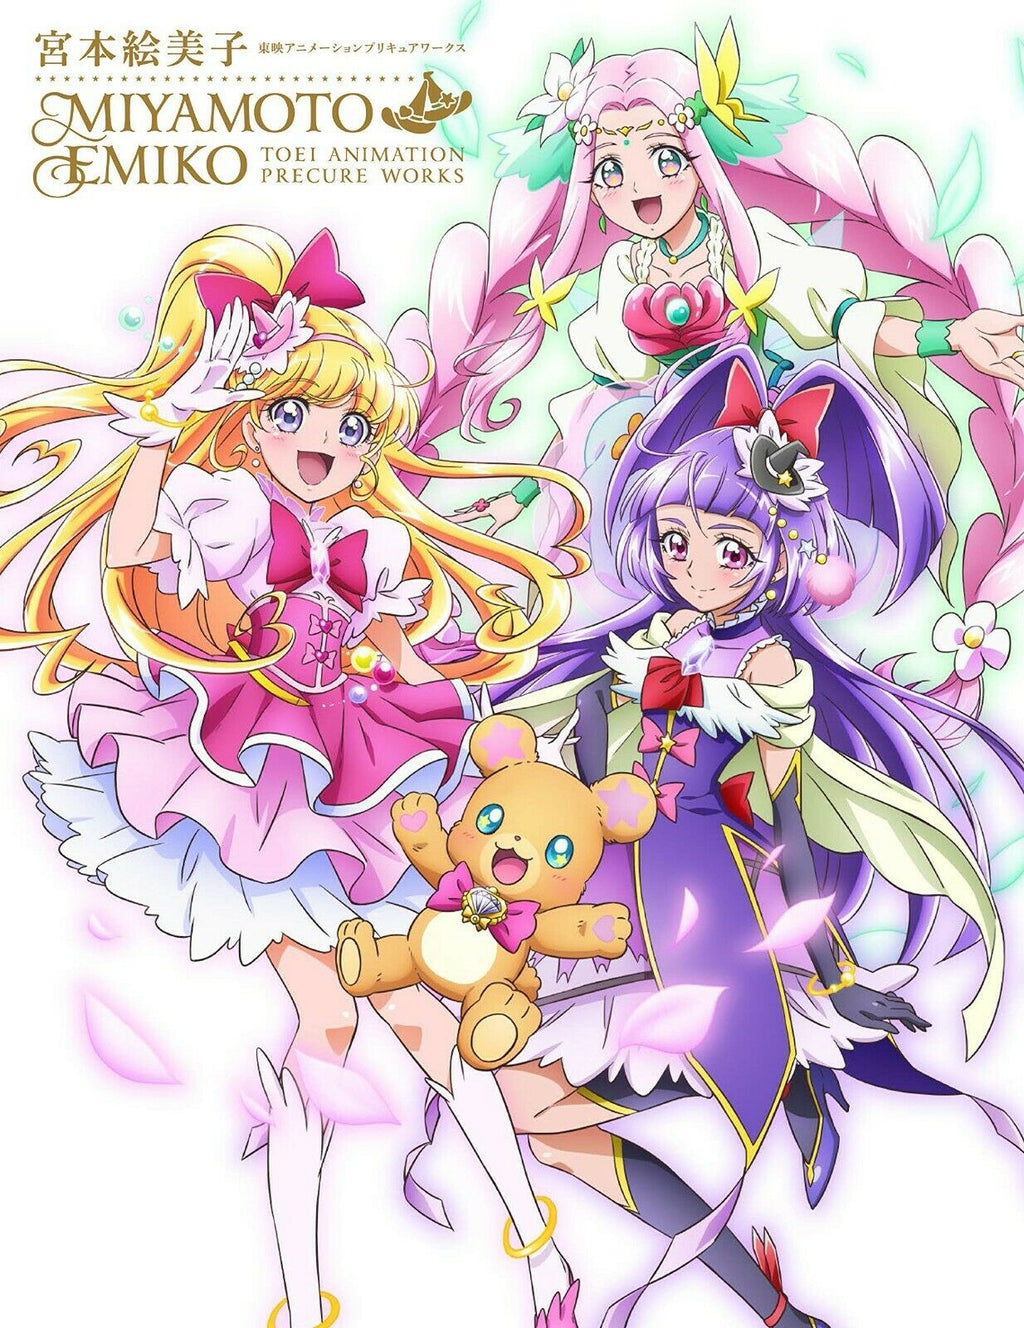 NEW Emiko Miyamoto Mahou Tsukai PRECURE Art Book | JAPAN Anime Maho Girls